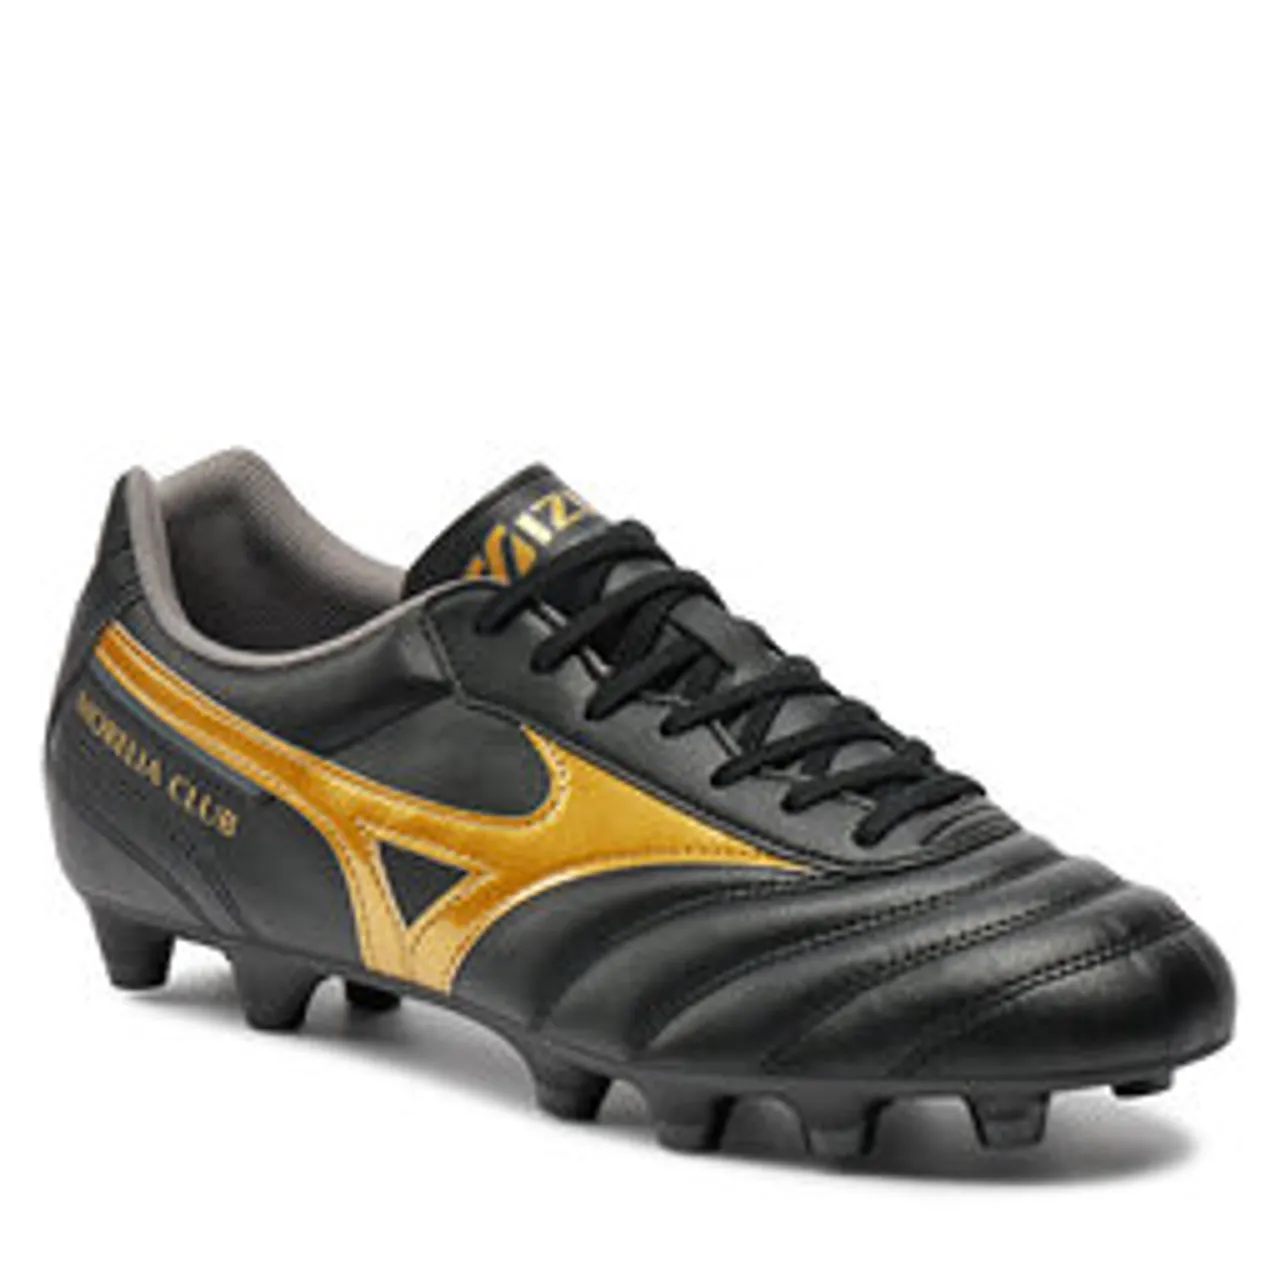 Schuhe Mizuno Morelia Ii Club Md P1GA2316 Black/Gold/Darkshadow 50